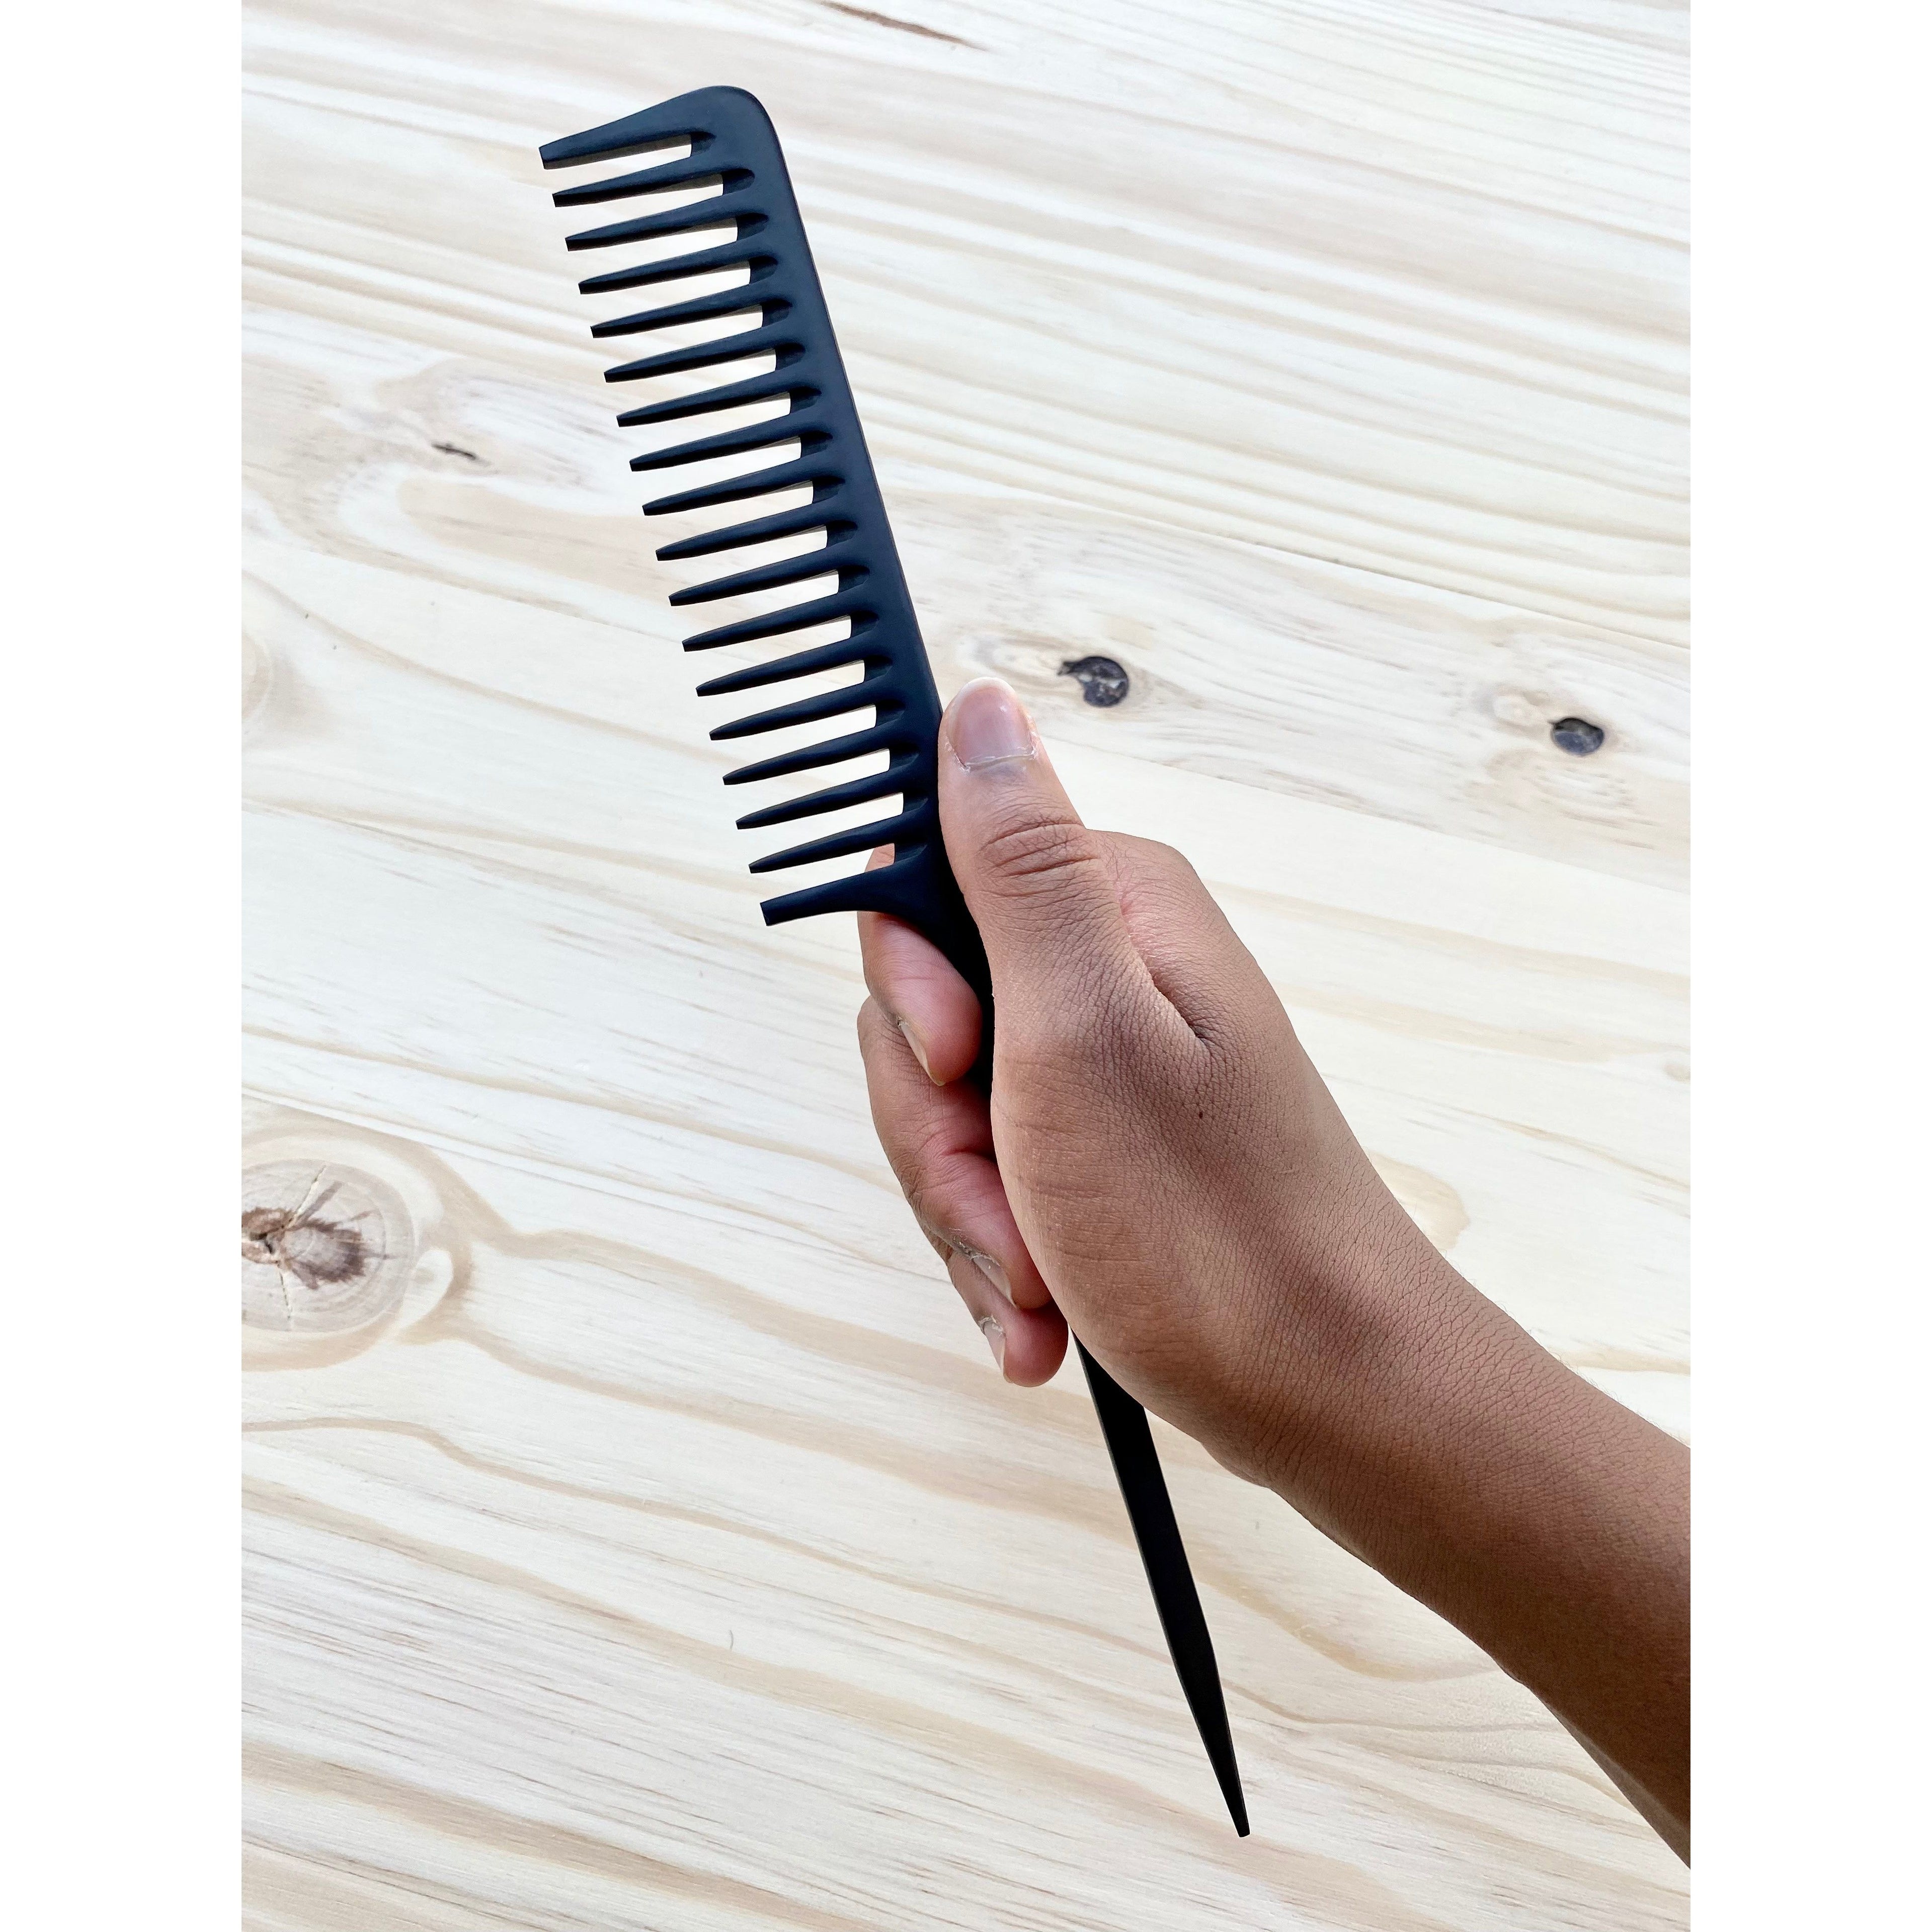 Karine long tail comb